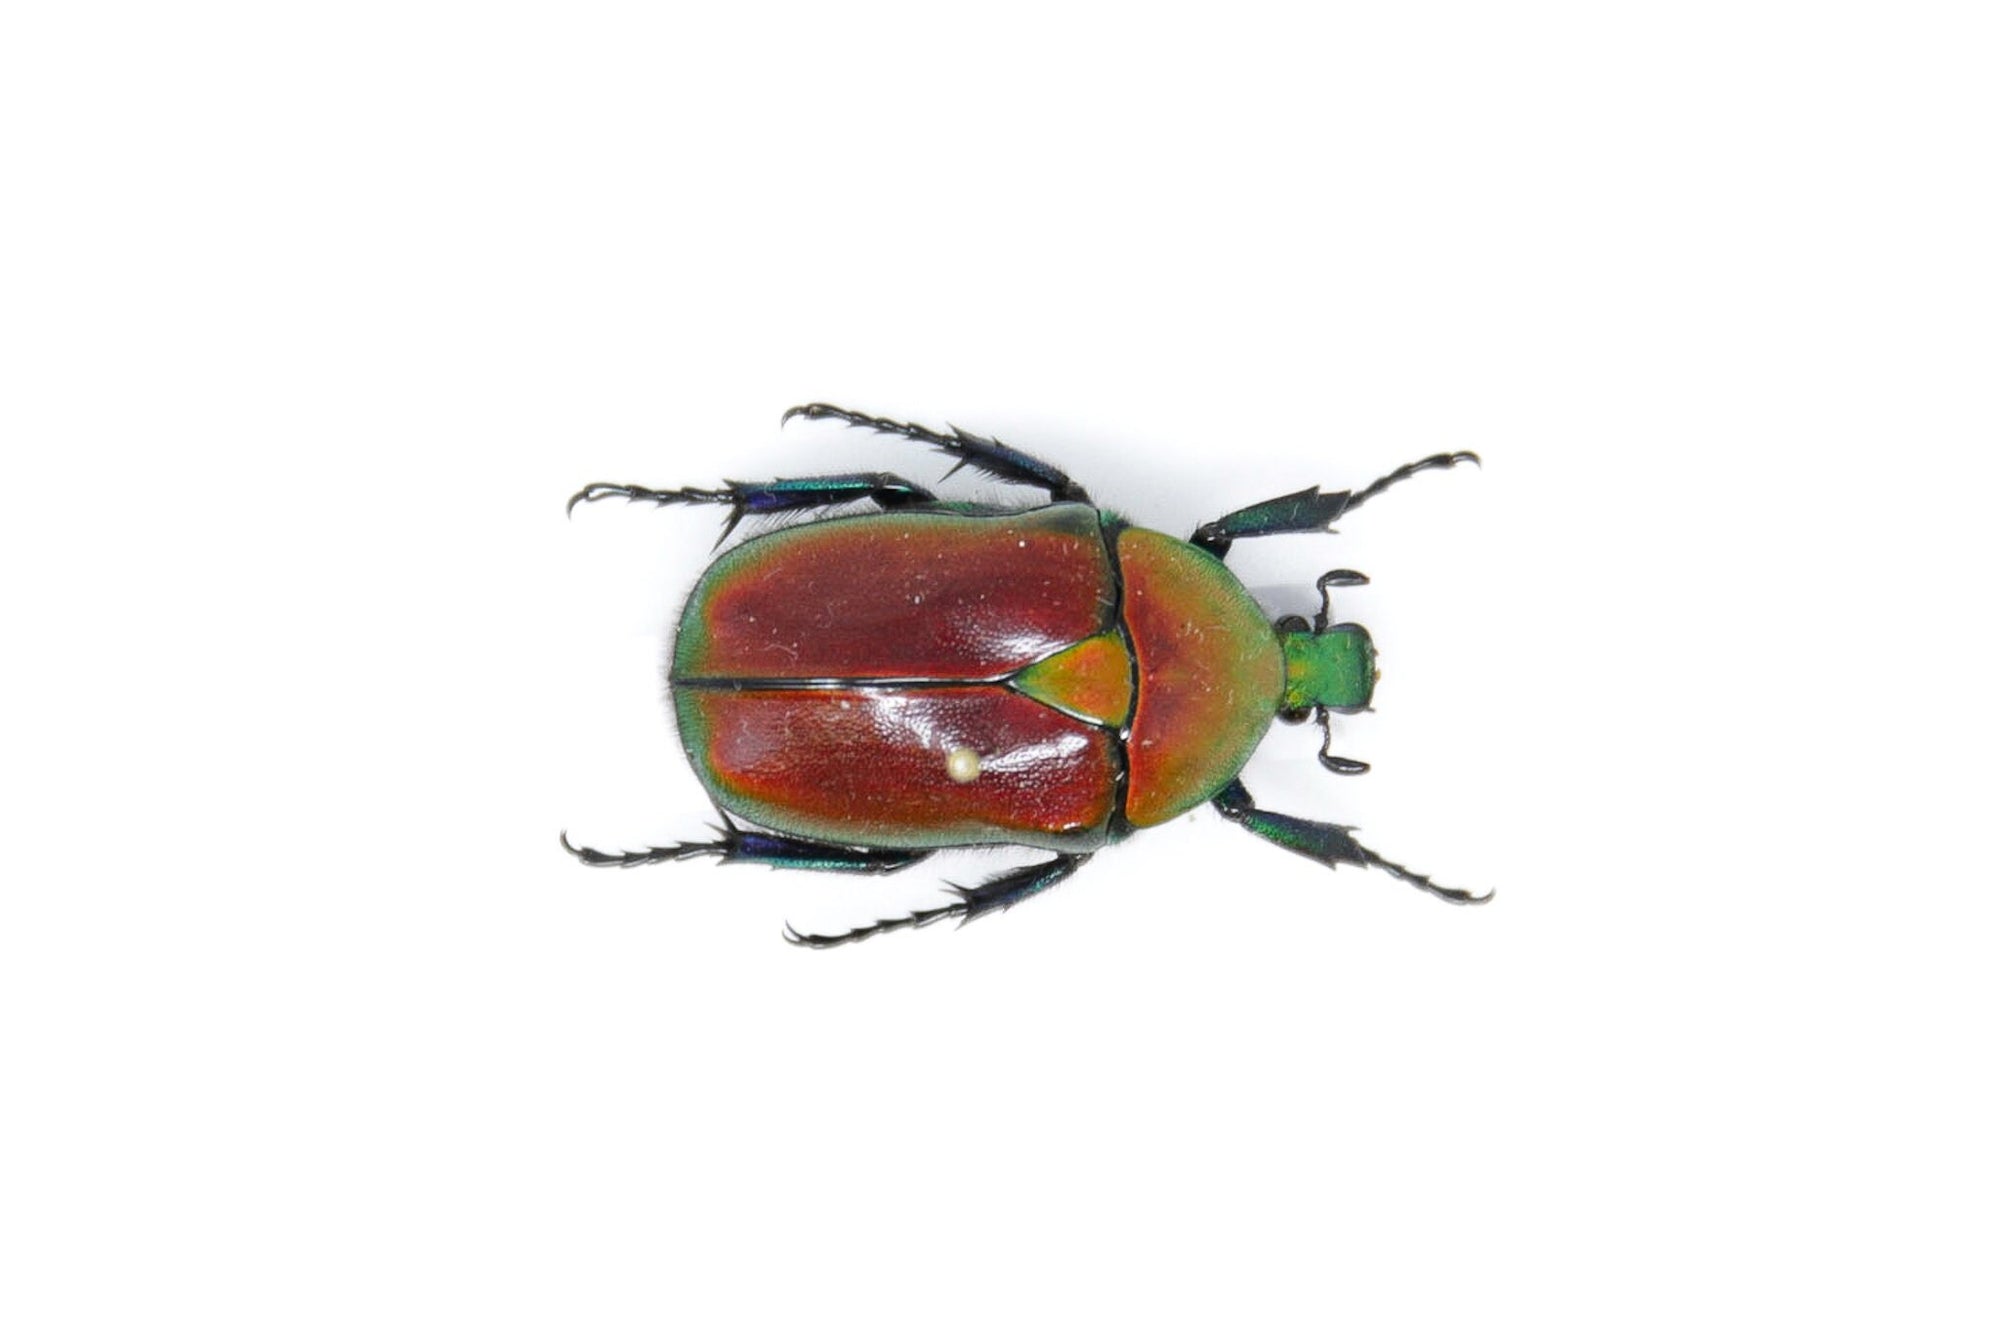 Torynorrhina flammea 30.7mm Thailand, A1 Real Beetle Pinned Set Specimen, Entomology Taxidermy #OC48